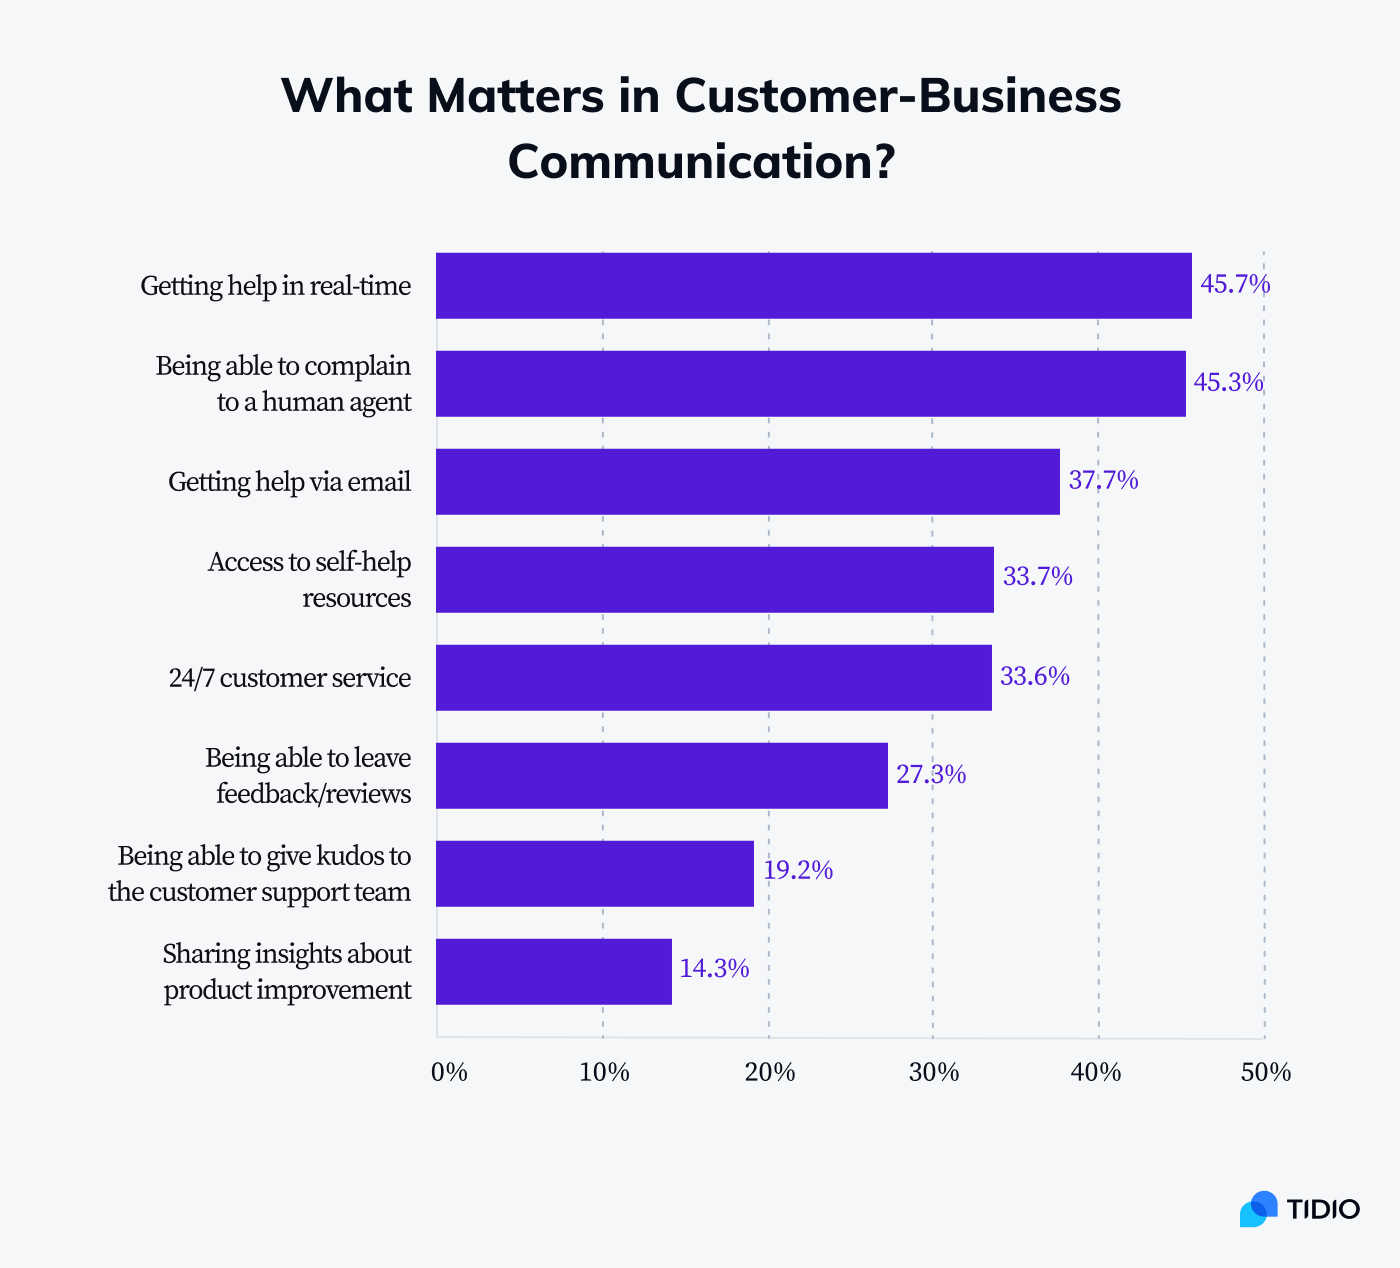 Factors that matter in customer-business communication